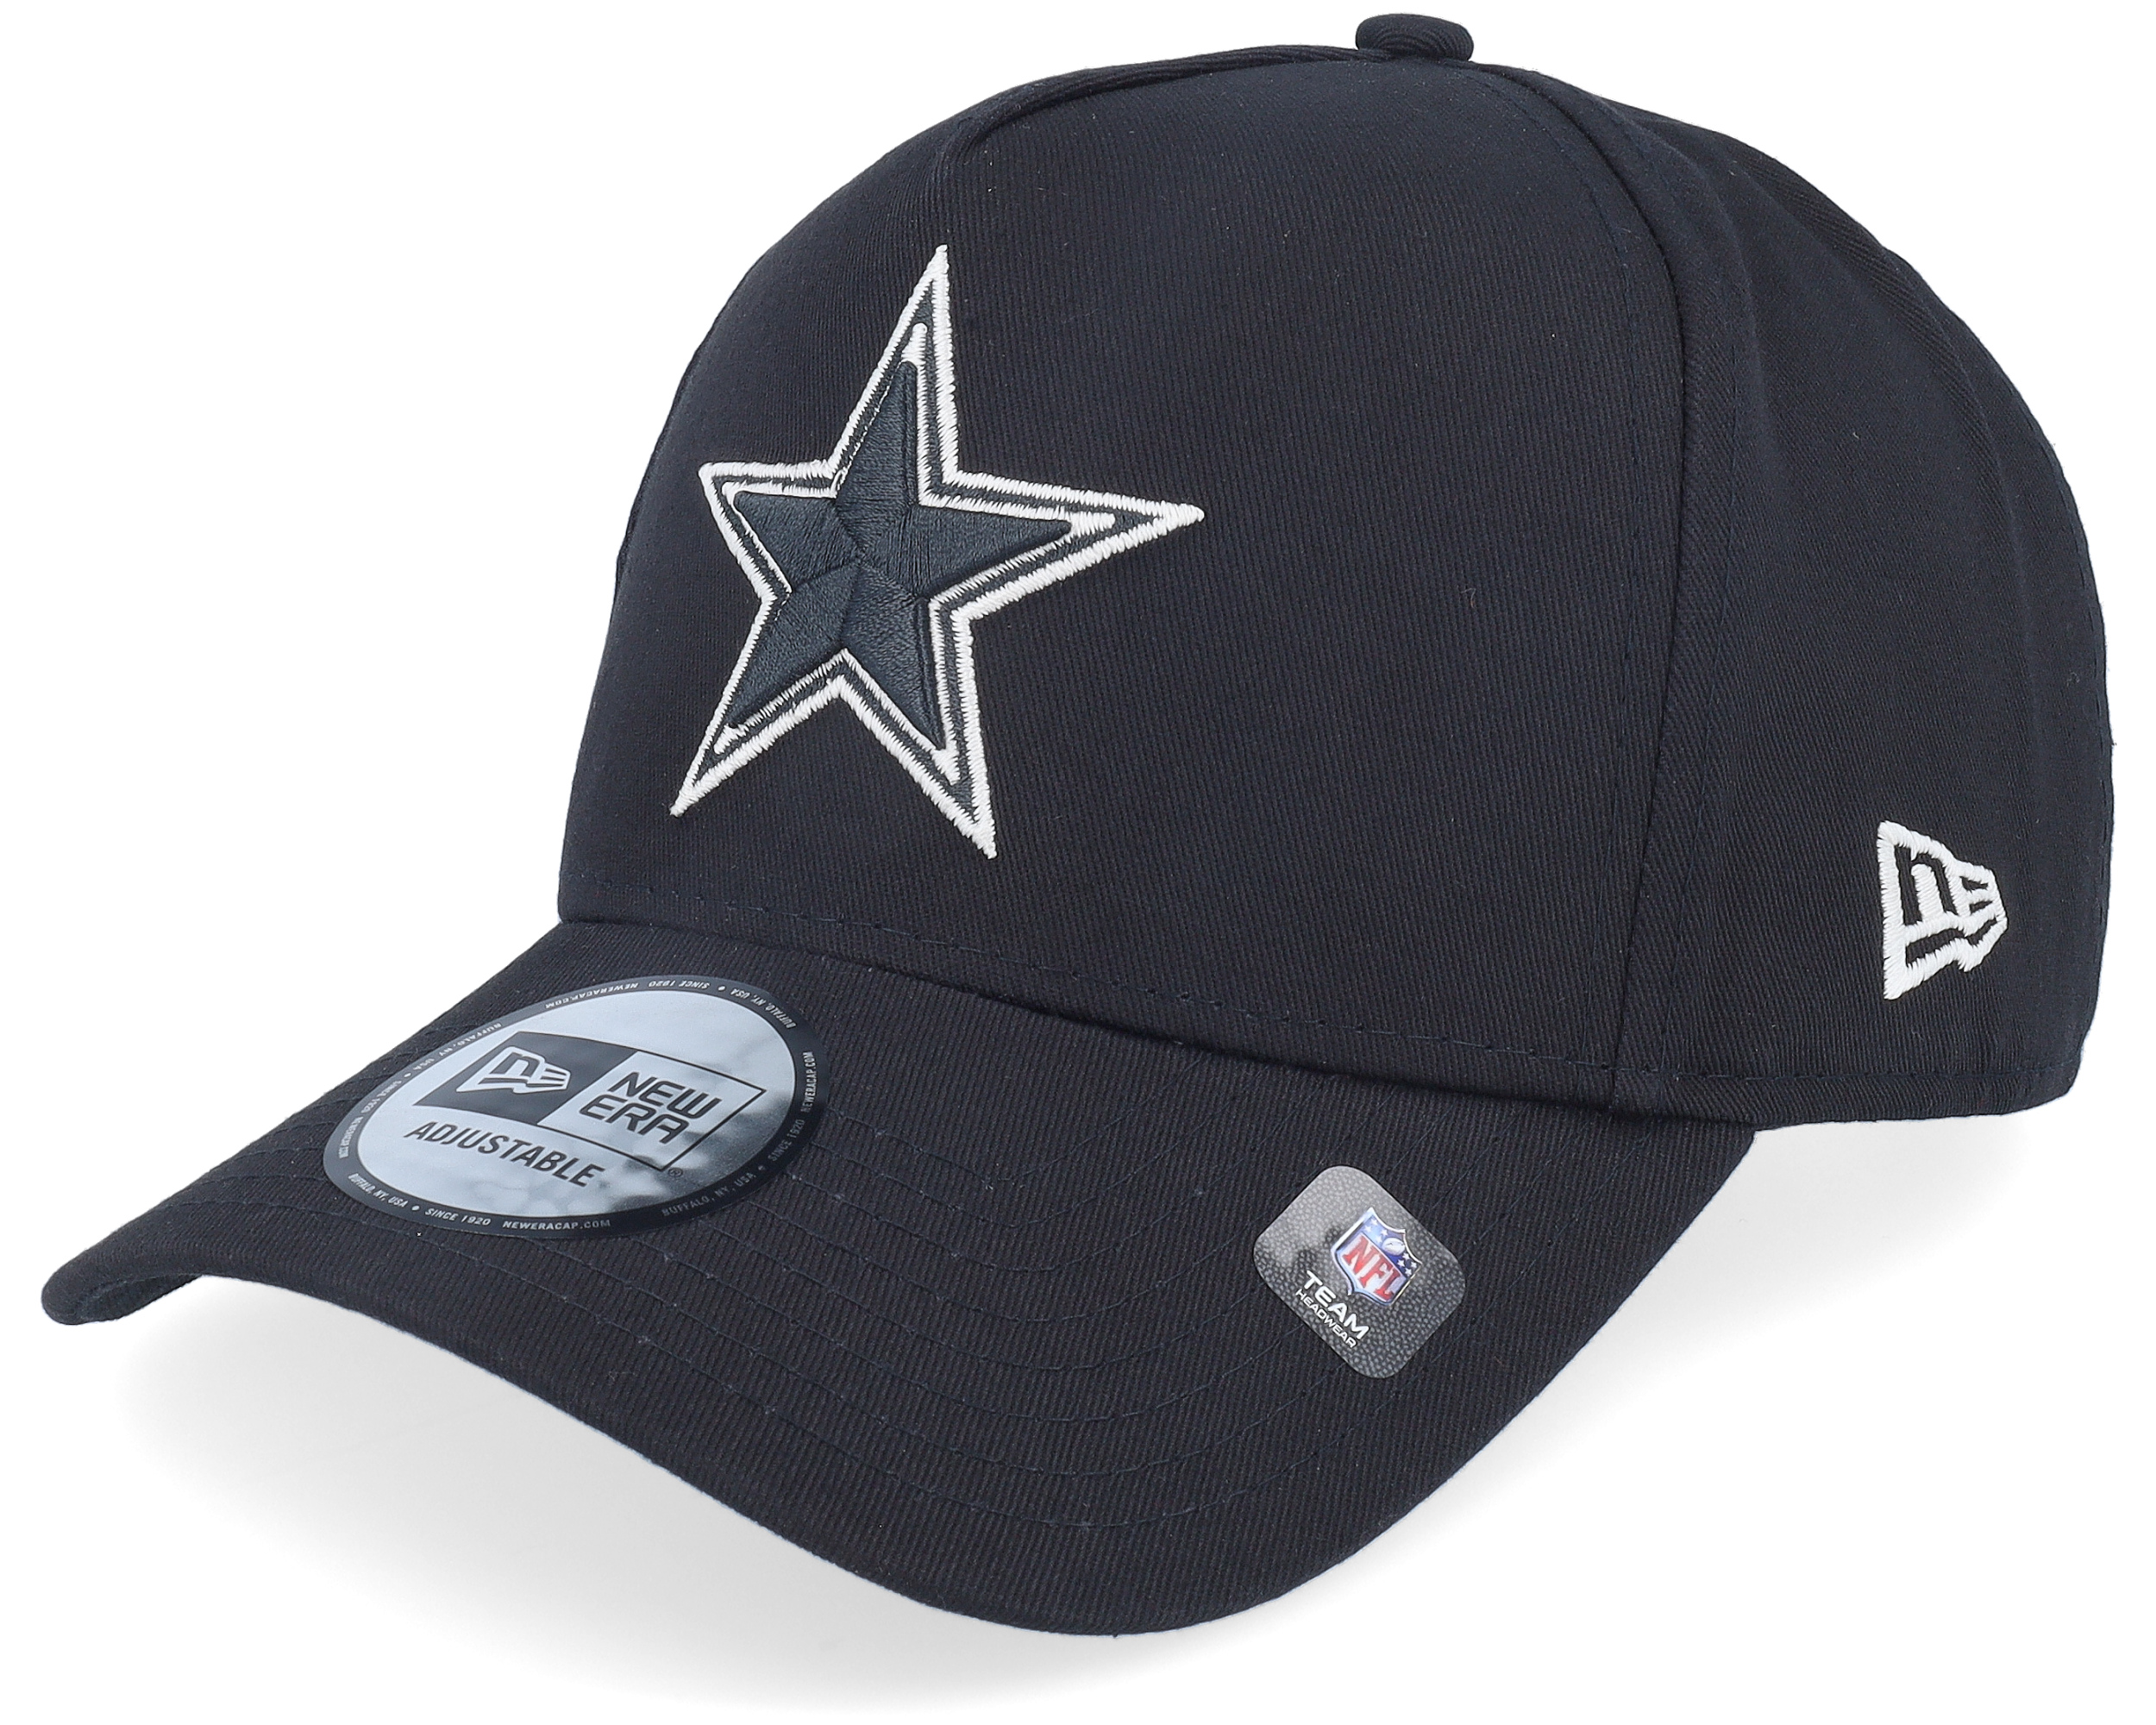 Hatstore Exclusive x Dallas Cowboys Glow In The Dark A-frame - New Era cap